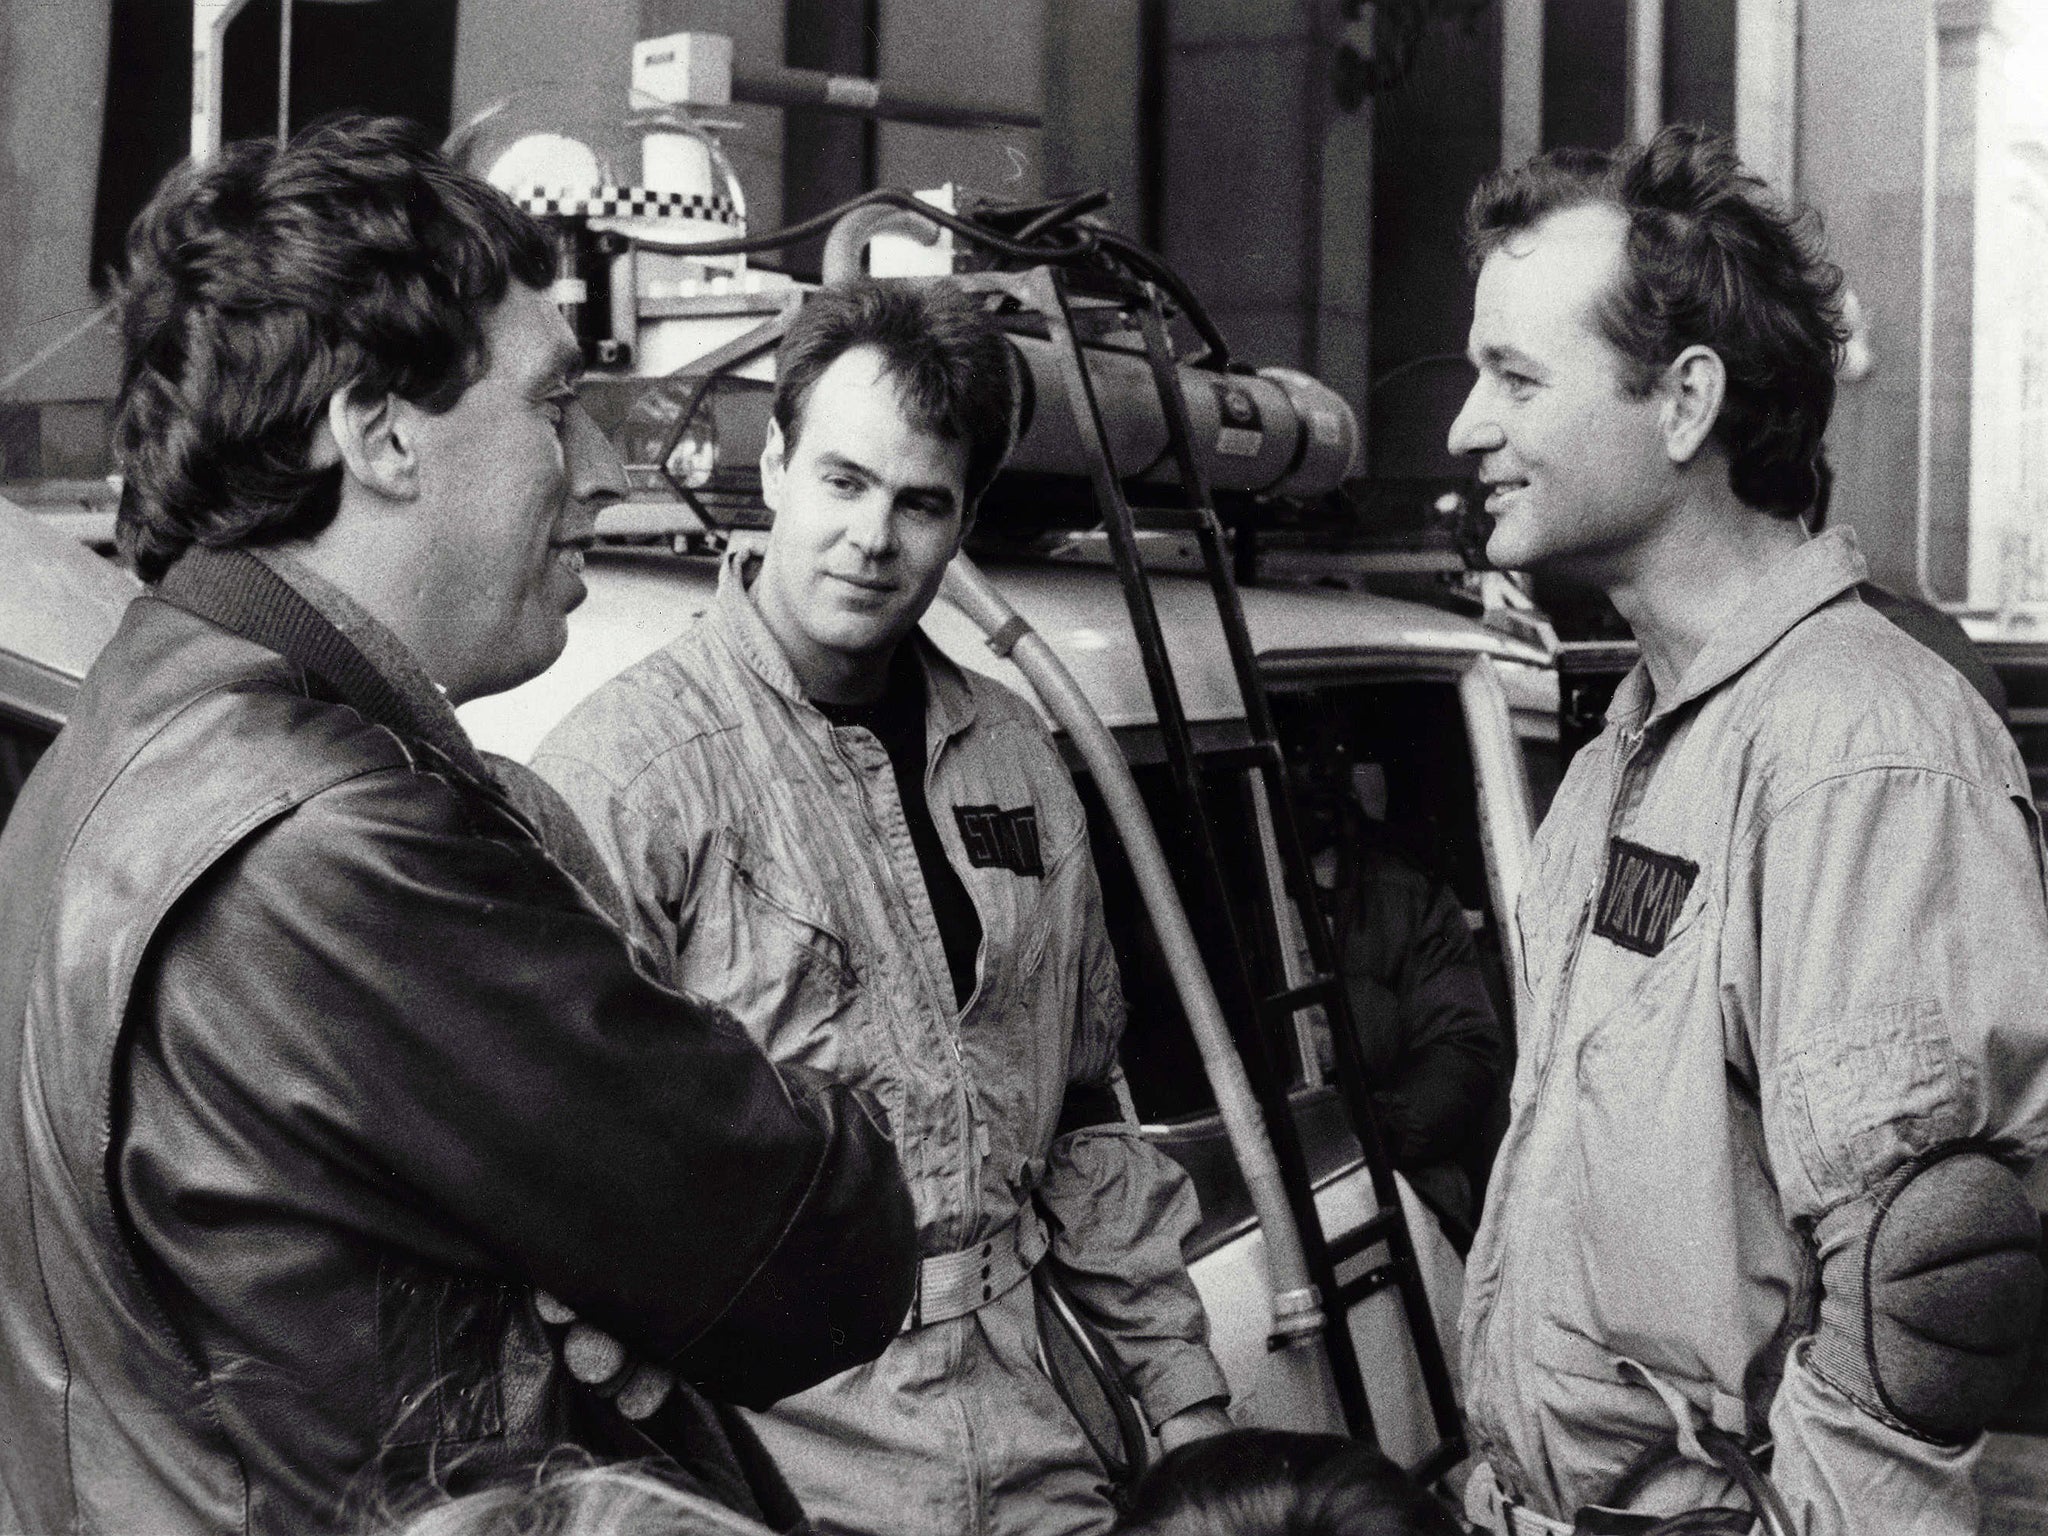 Alongside Dan Aykroyd and Bill Murray on the set of ‘Ghostbusters’